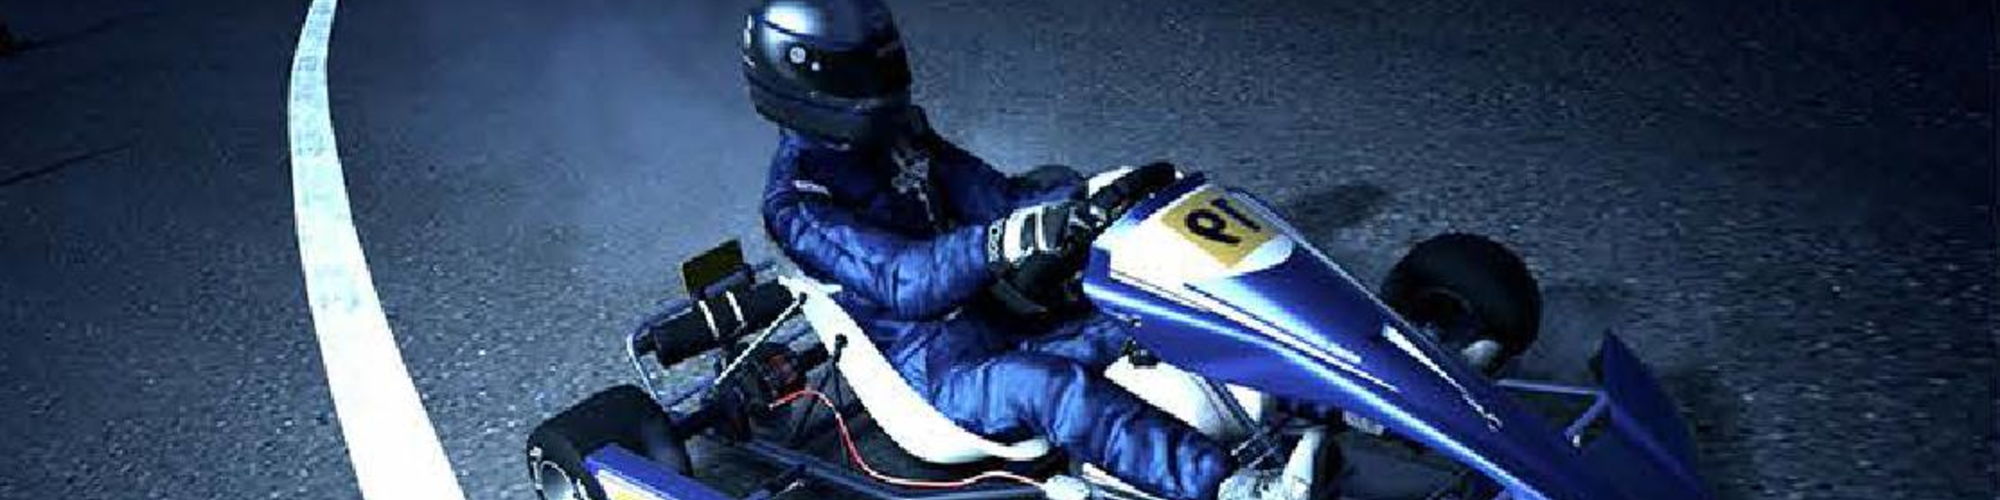 DOOS Karting  cover image